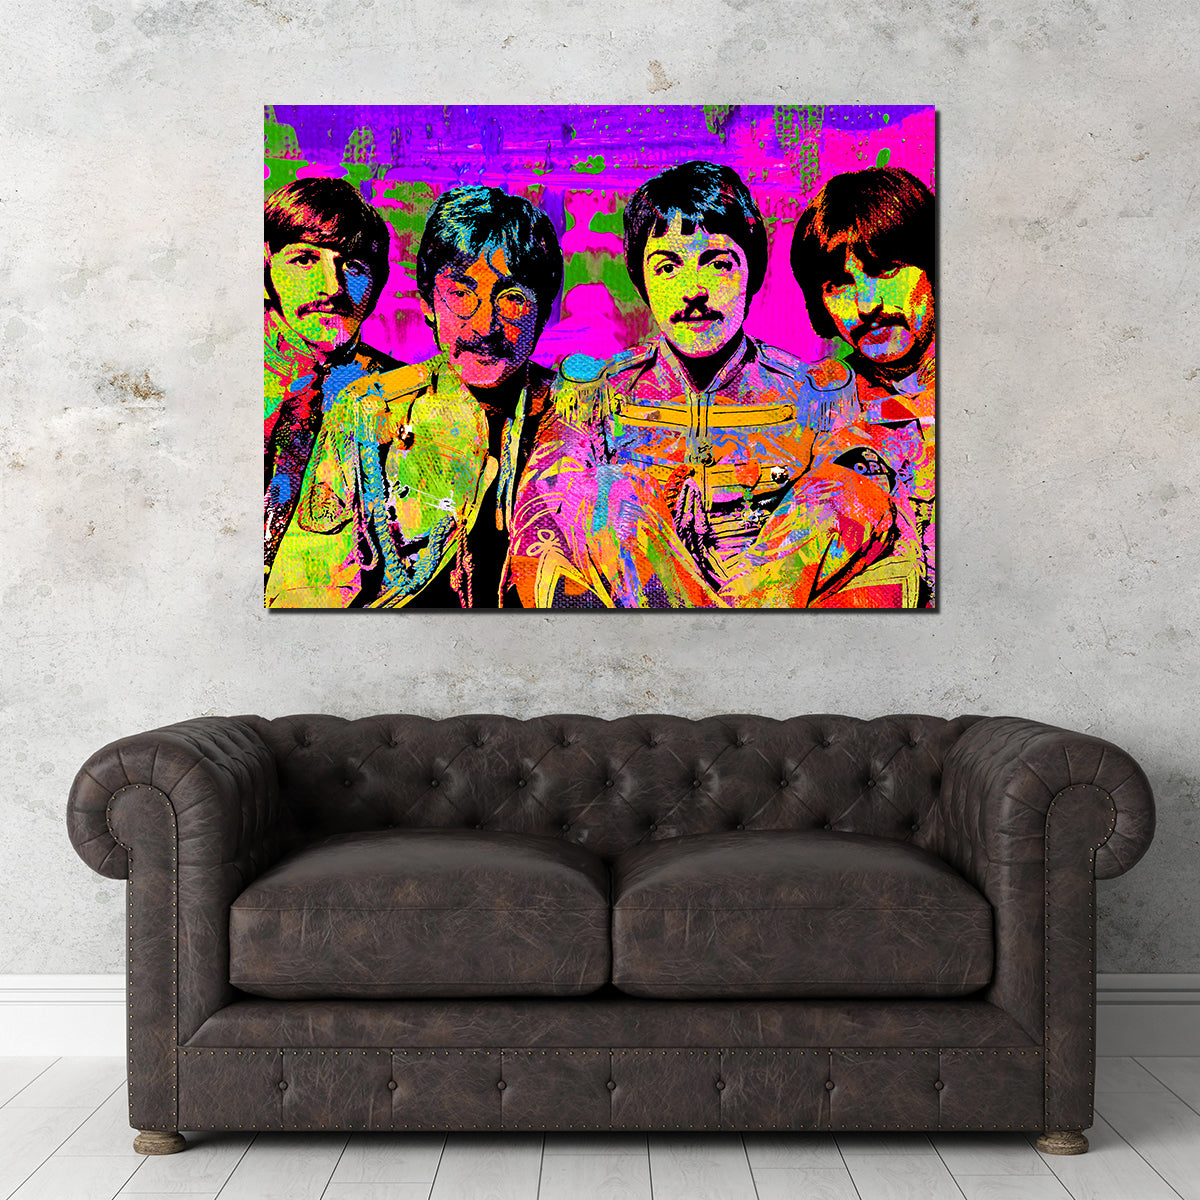 Sgt. Pepper's Beatles